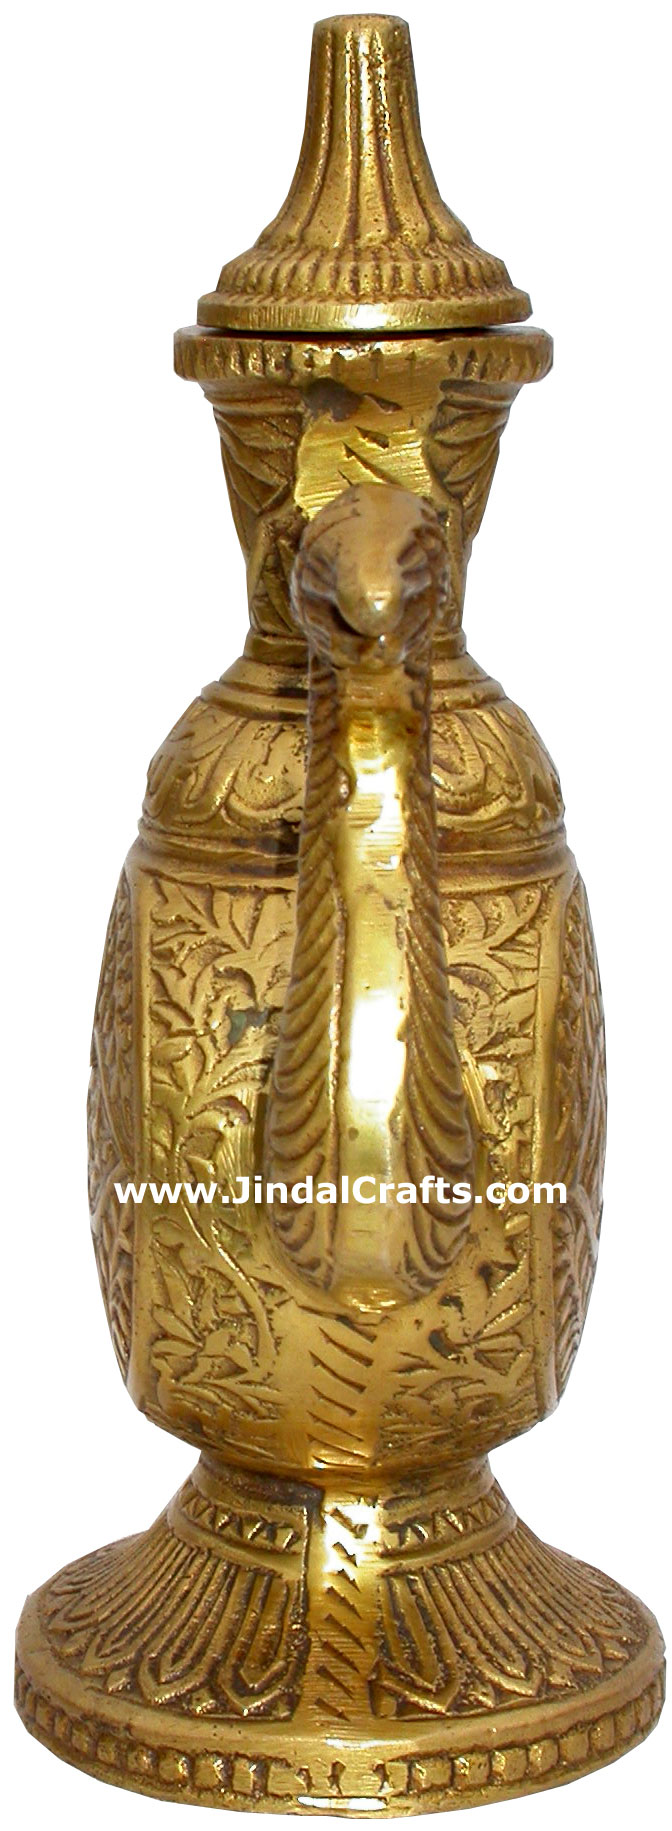 Brass Surahi Home Decoration Unique Metal Crafts India